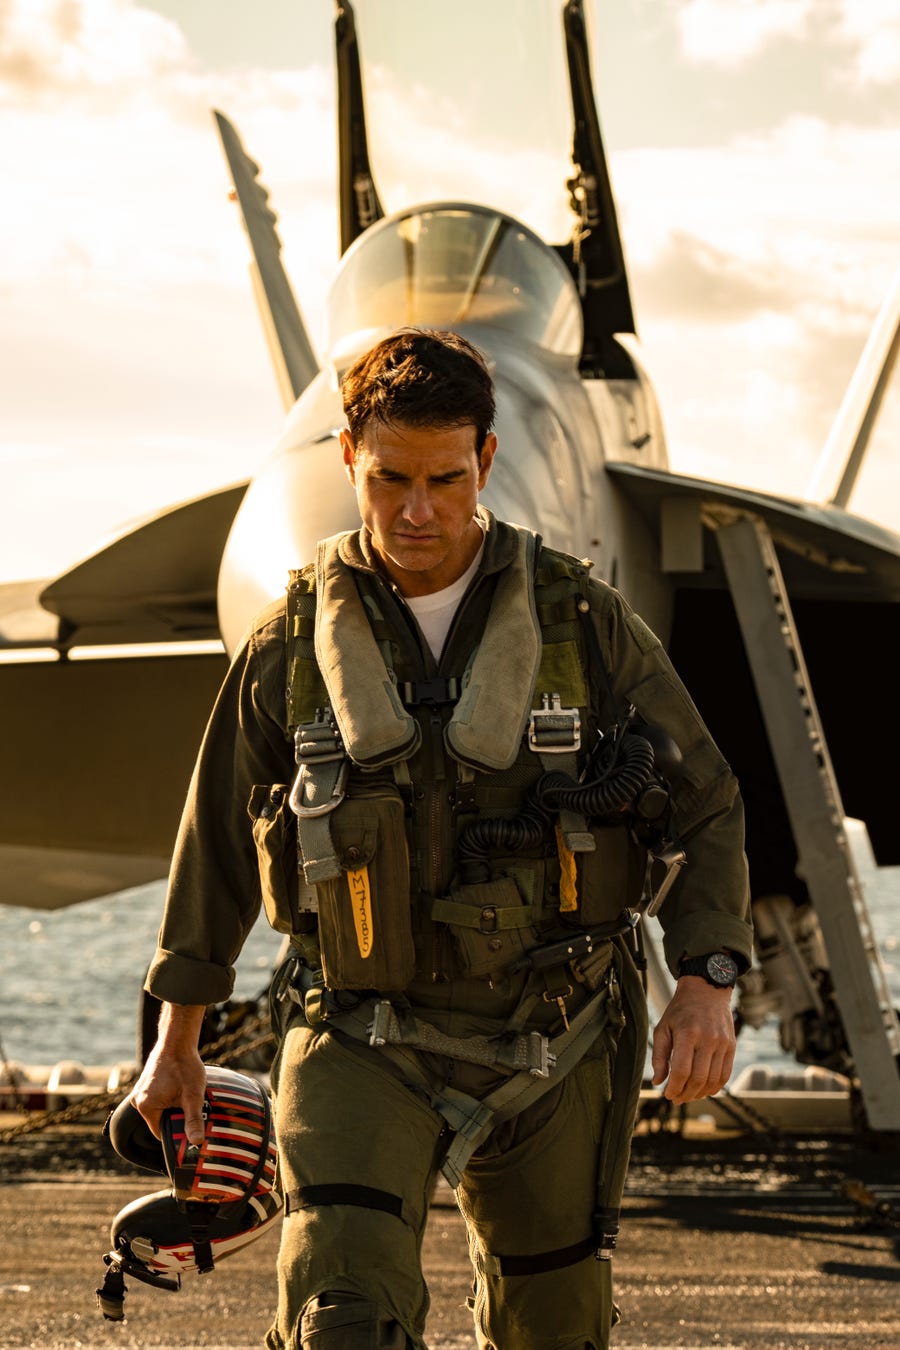 Tom Cruise reprises his role as Capt. Pete "Maverick" Mitchell in "Top Gun: Maverick."